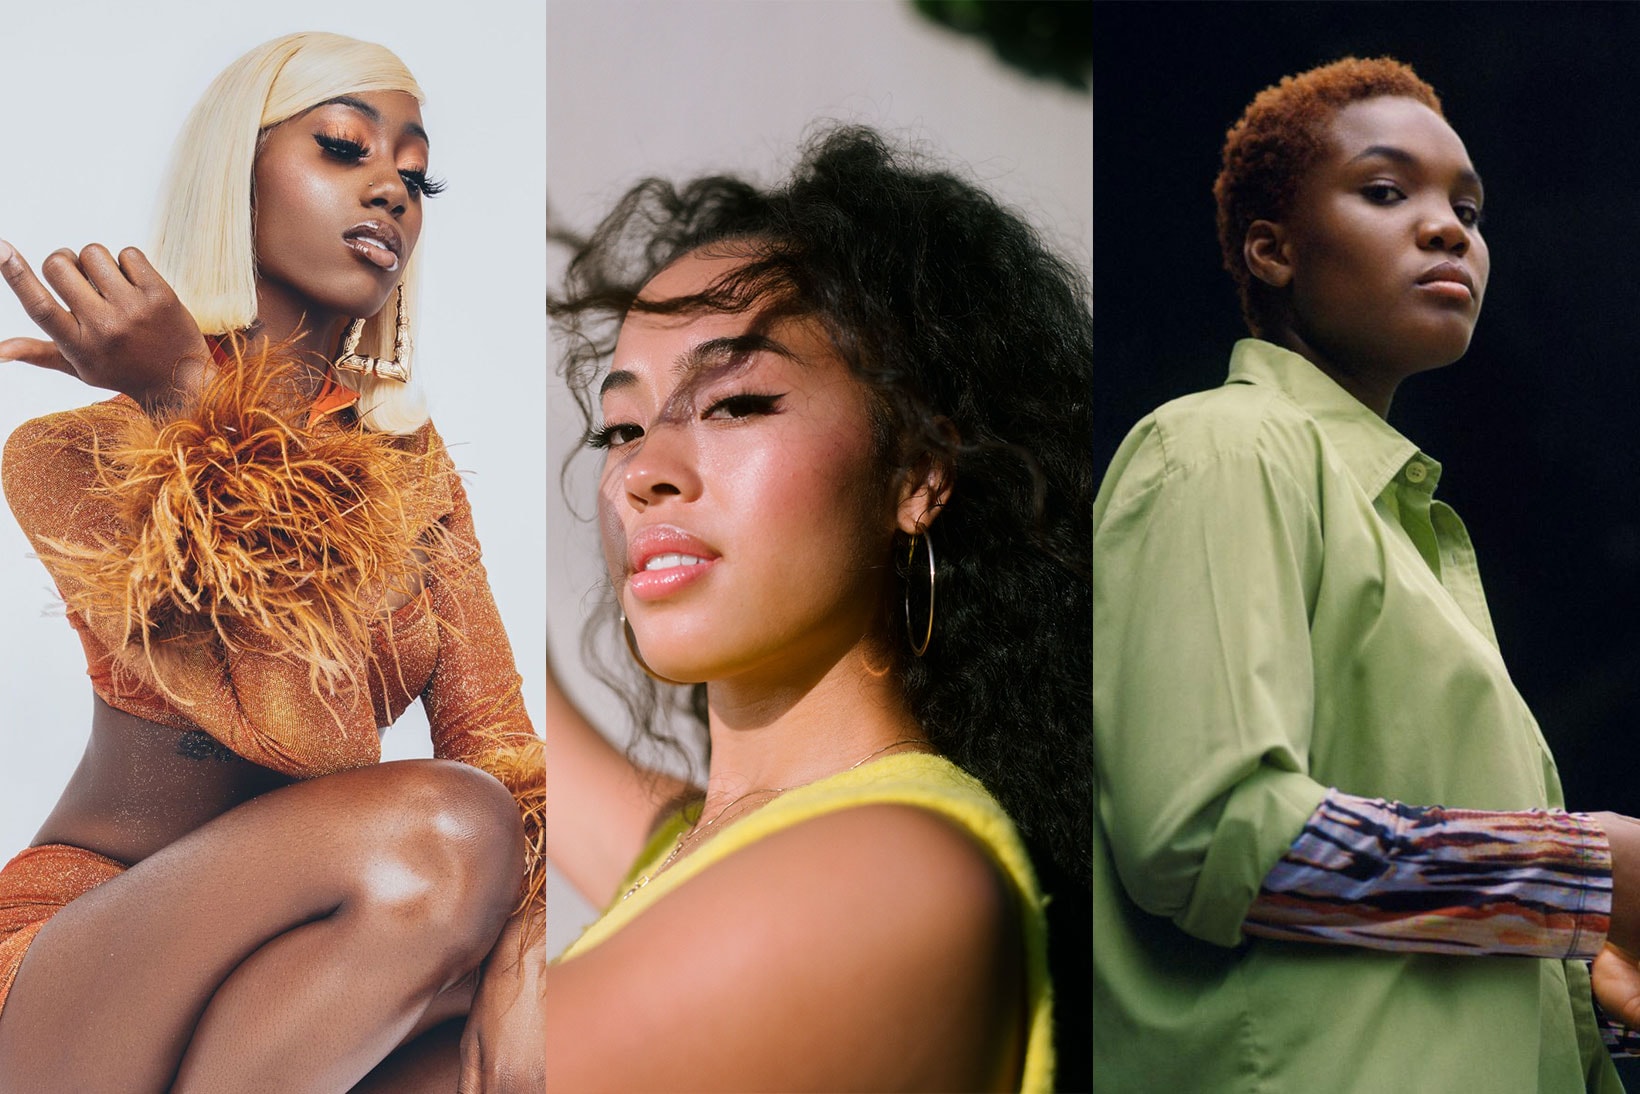 best music artists 2021 up and coming emerging hip hop rap R&B female women singers joyce wrice flo milli arlo parks